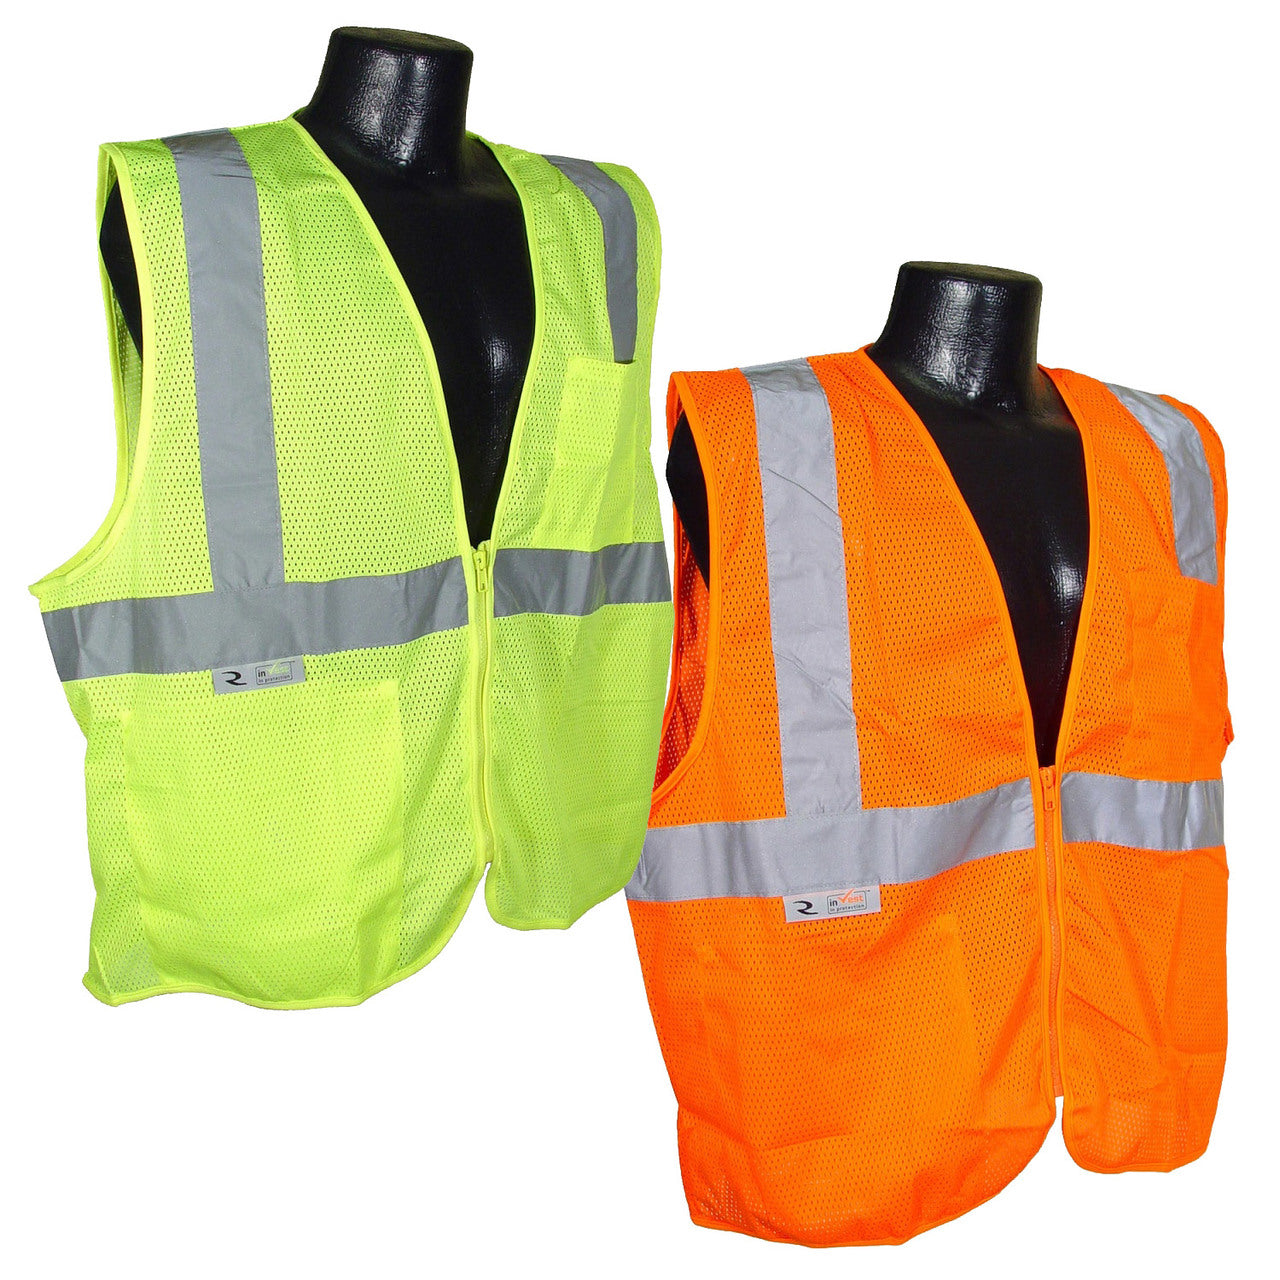 Radians Economy Class 2 Mesh Safety Vest with Zipper, SV2